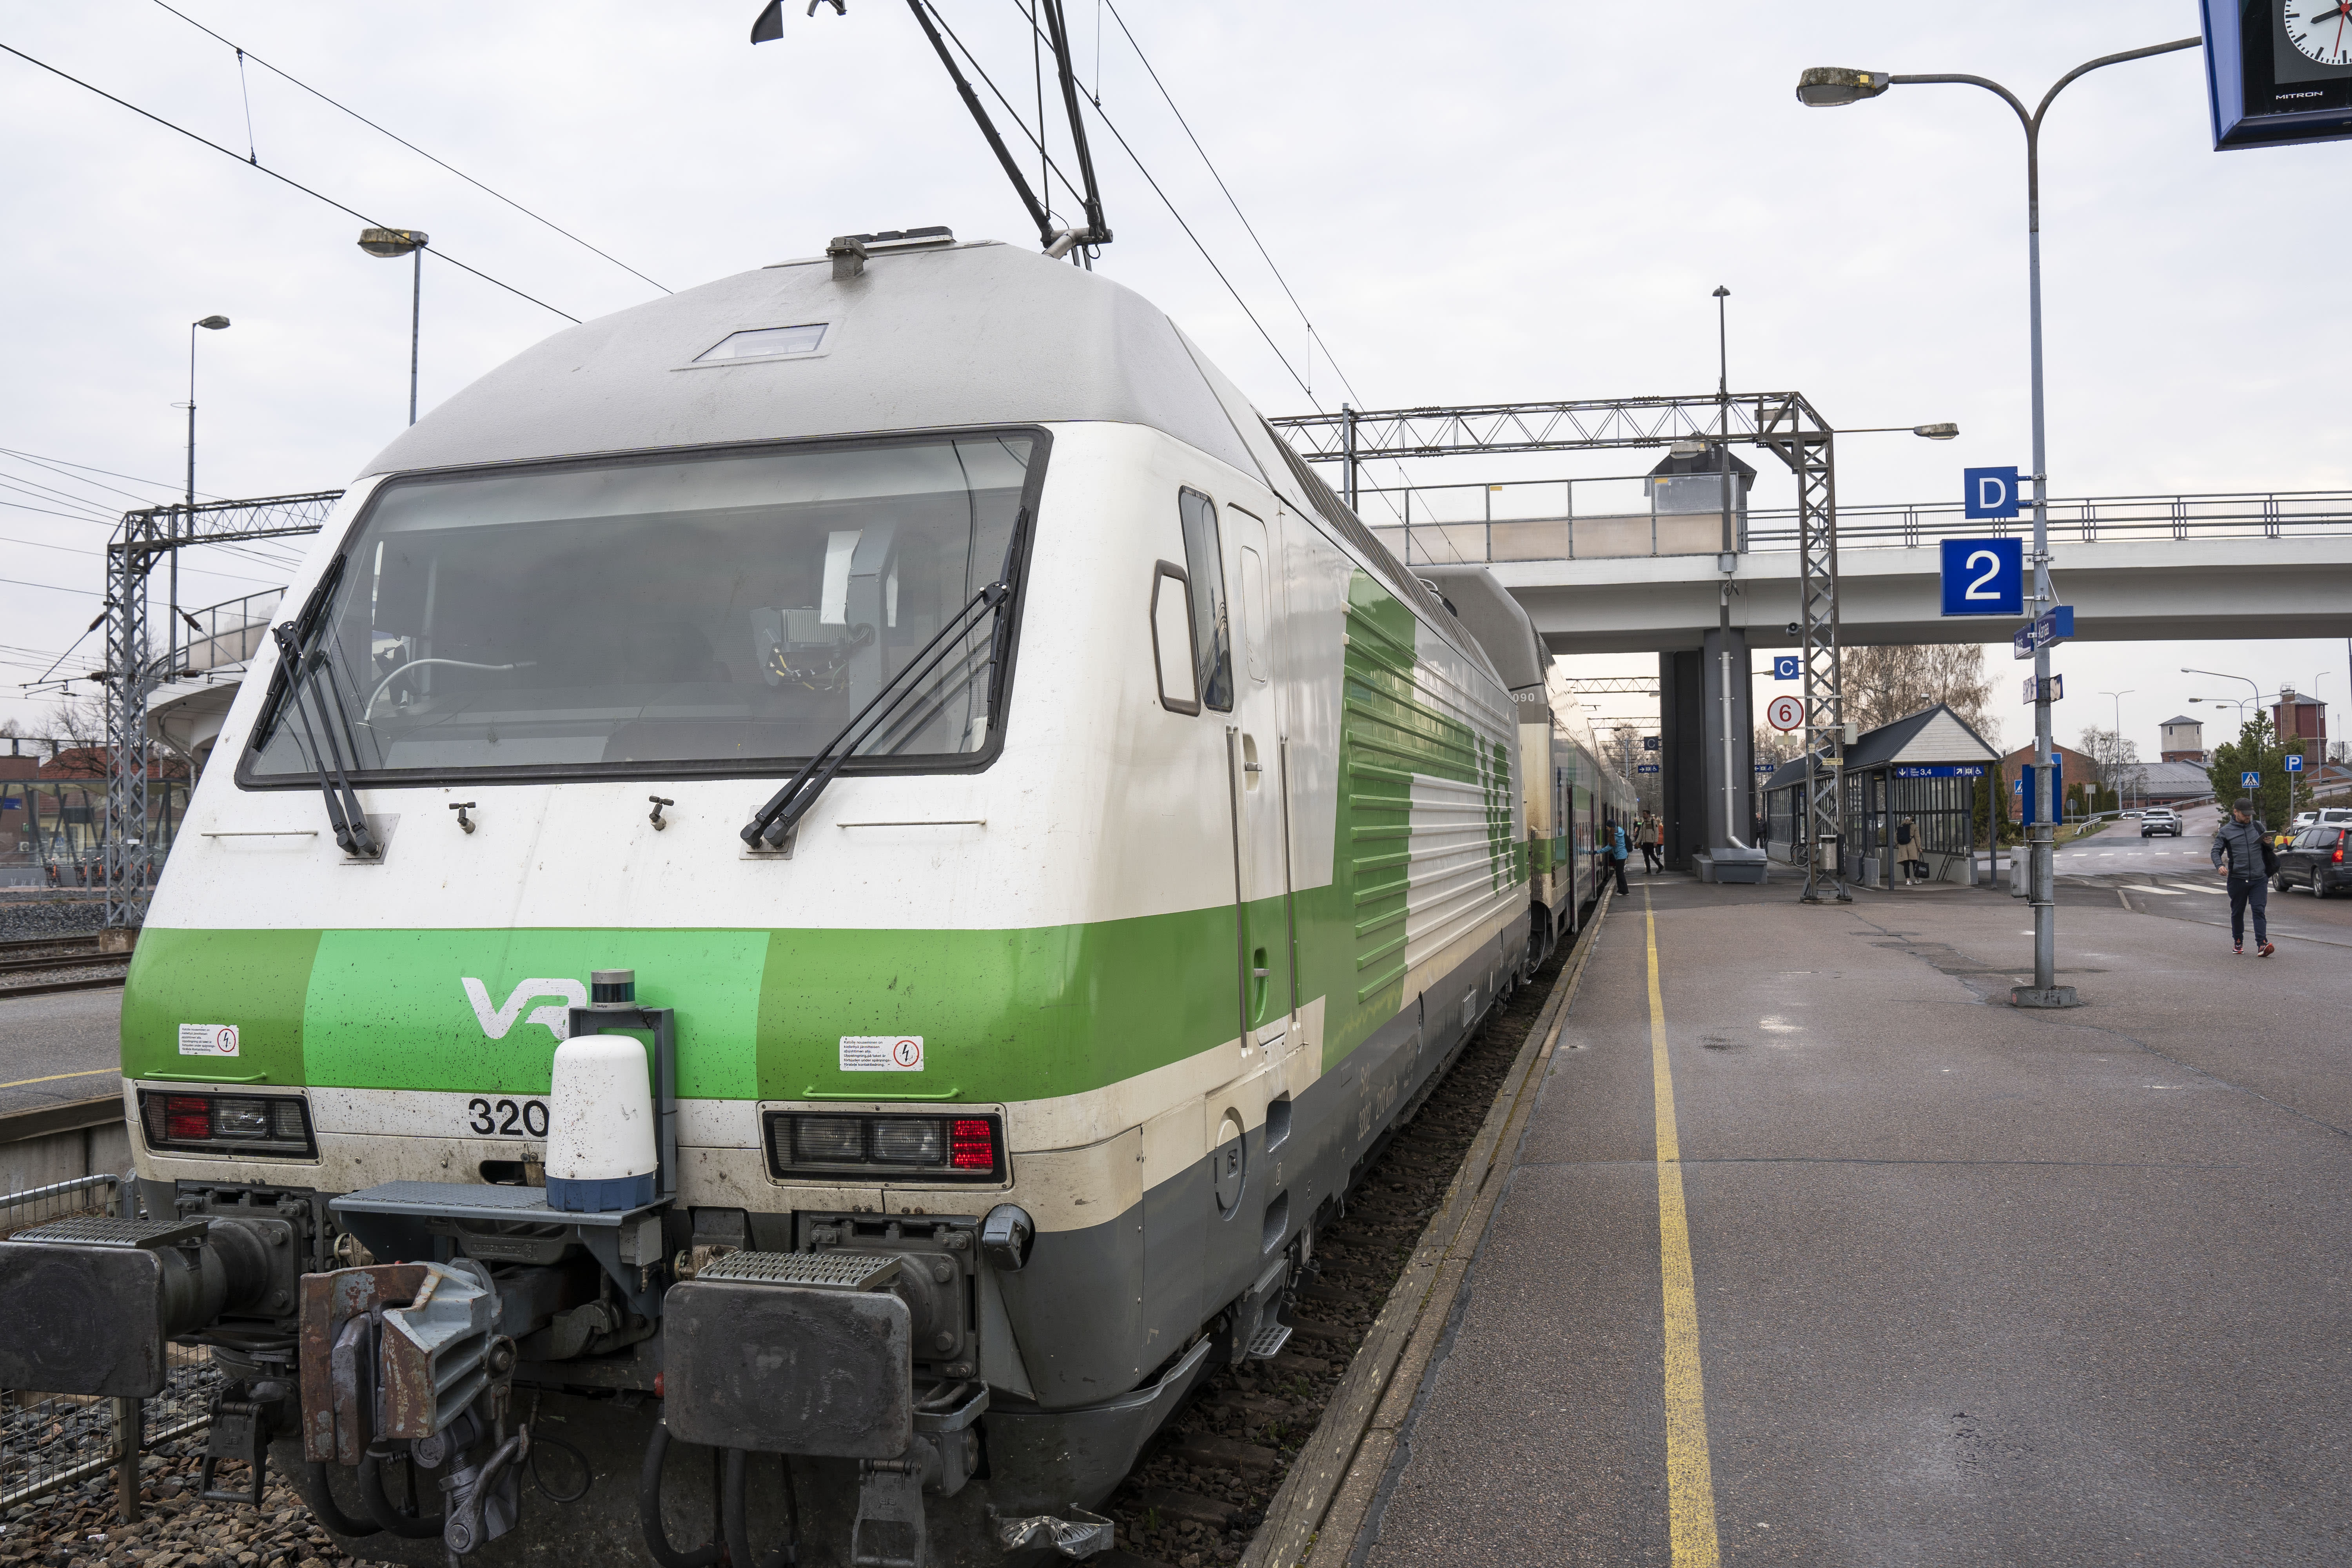 Northern Finland’s train service was interrupted